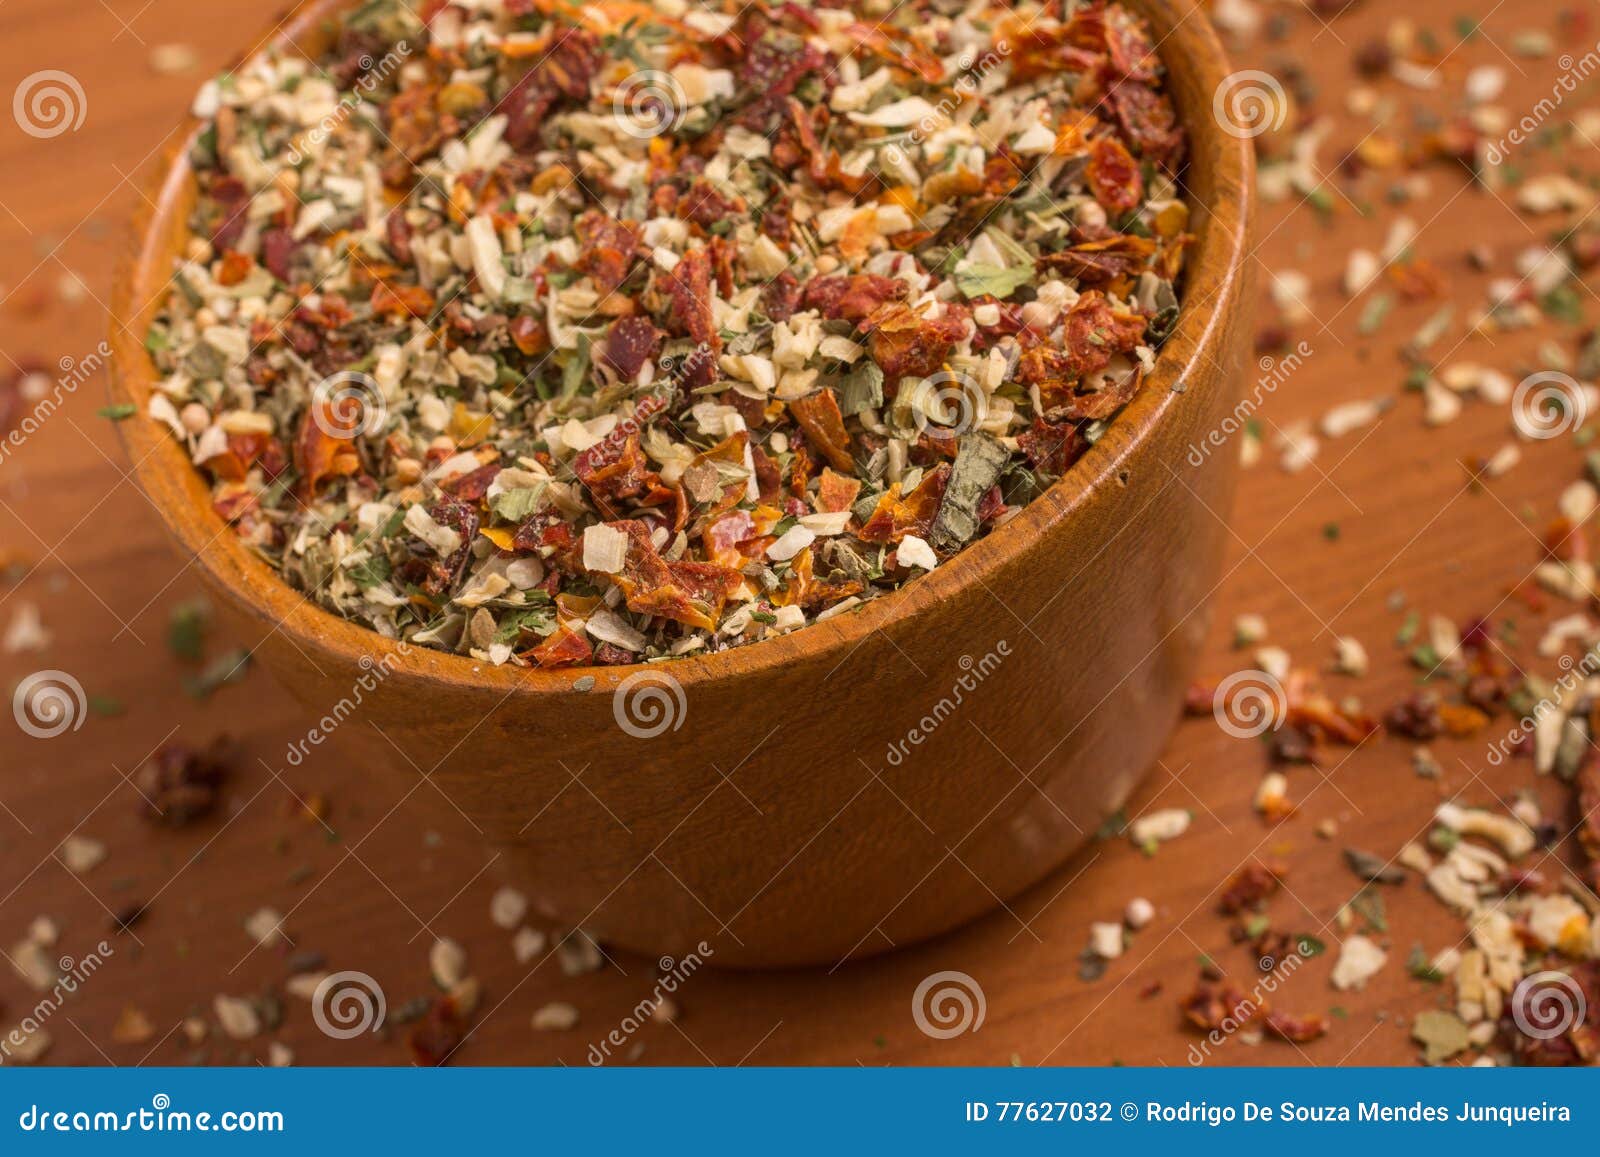 chimichurri herbs into a bowl